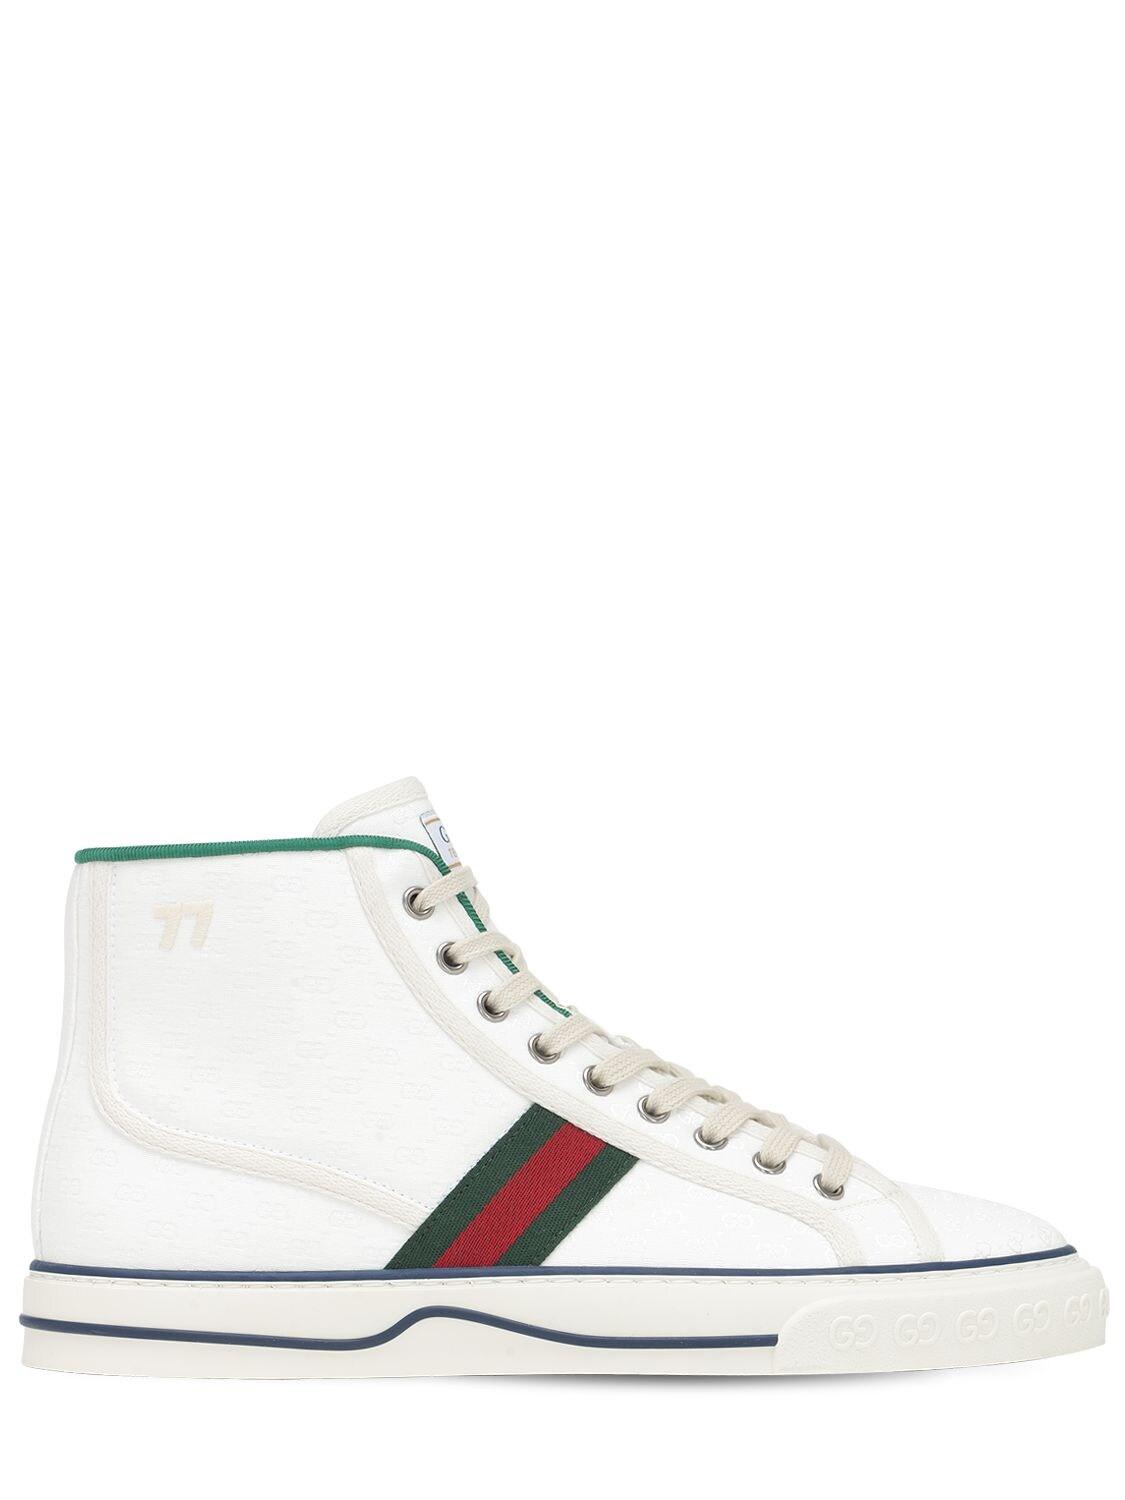 Gucci Gg Mignon Jacquard Tennis 1977 Sneakers in White for Men - Lyst